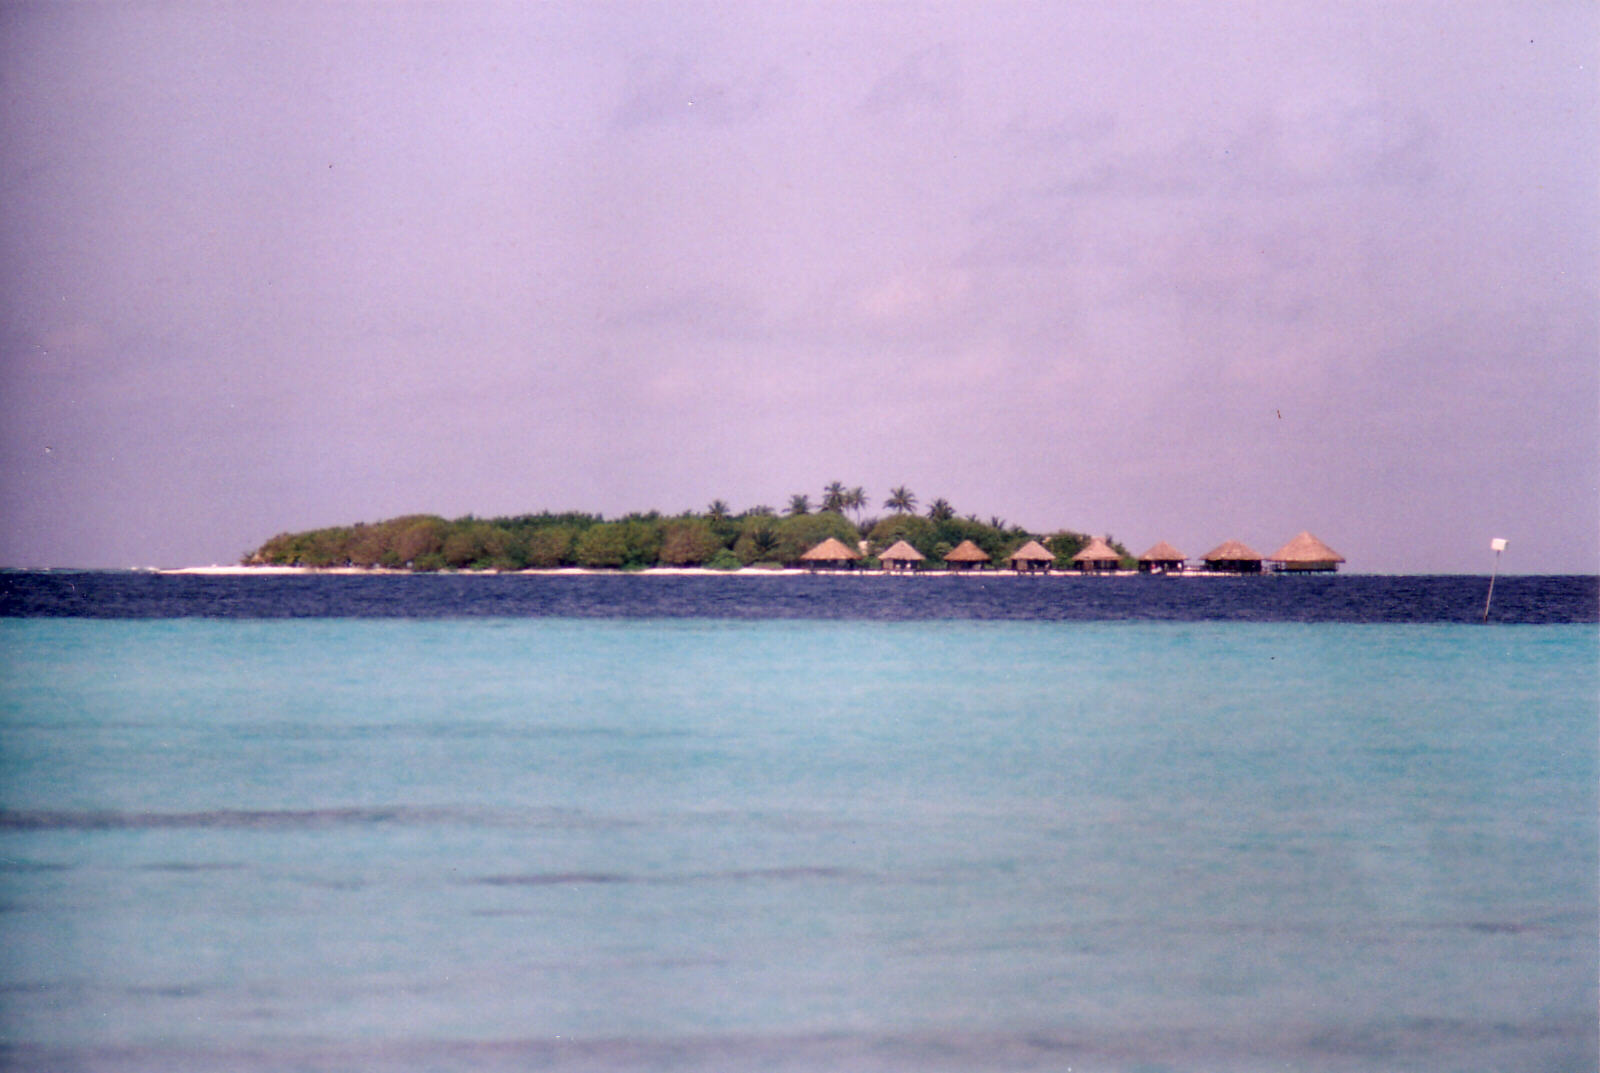 Wadhoo Island in the Maldives